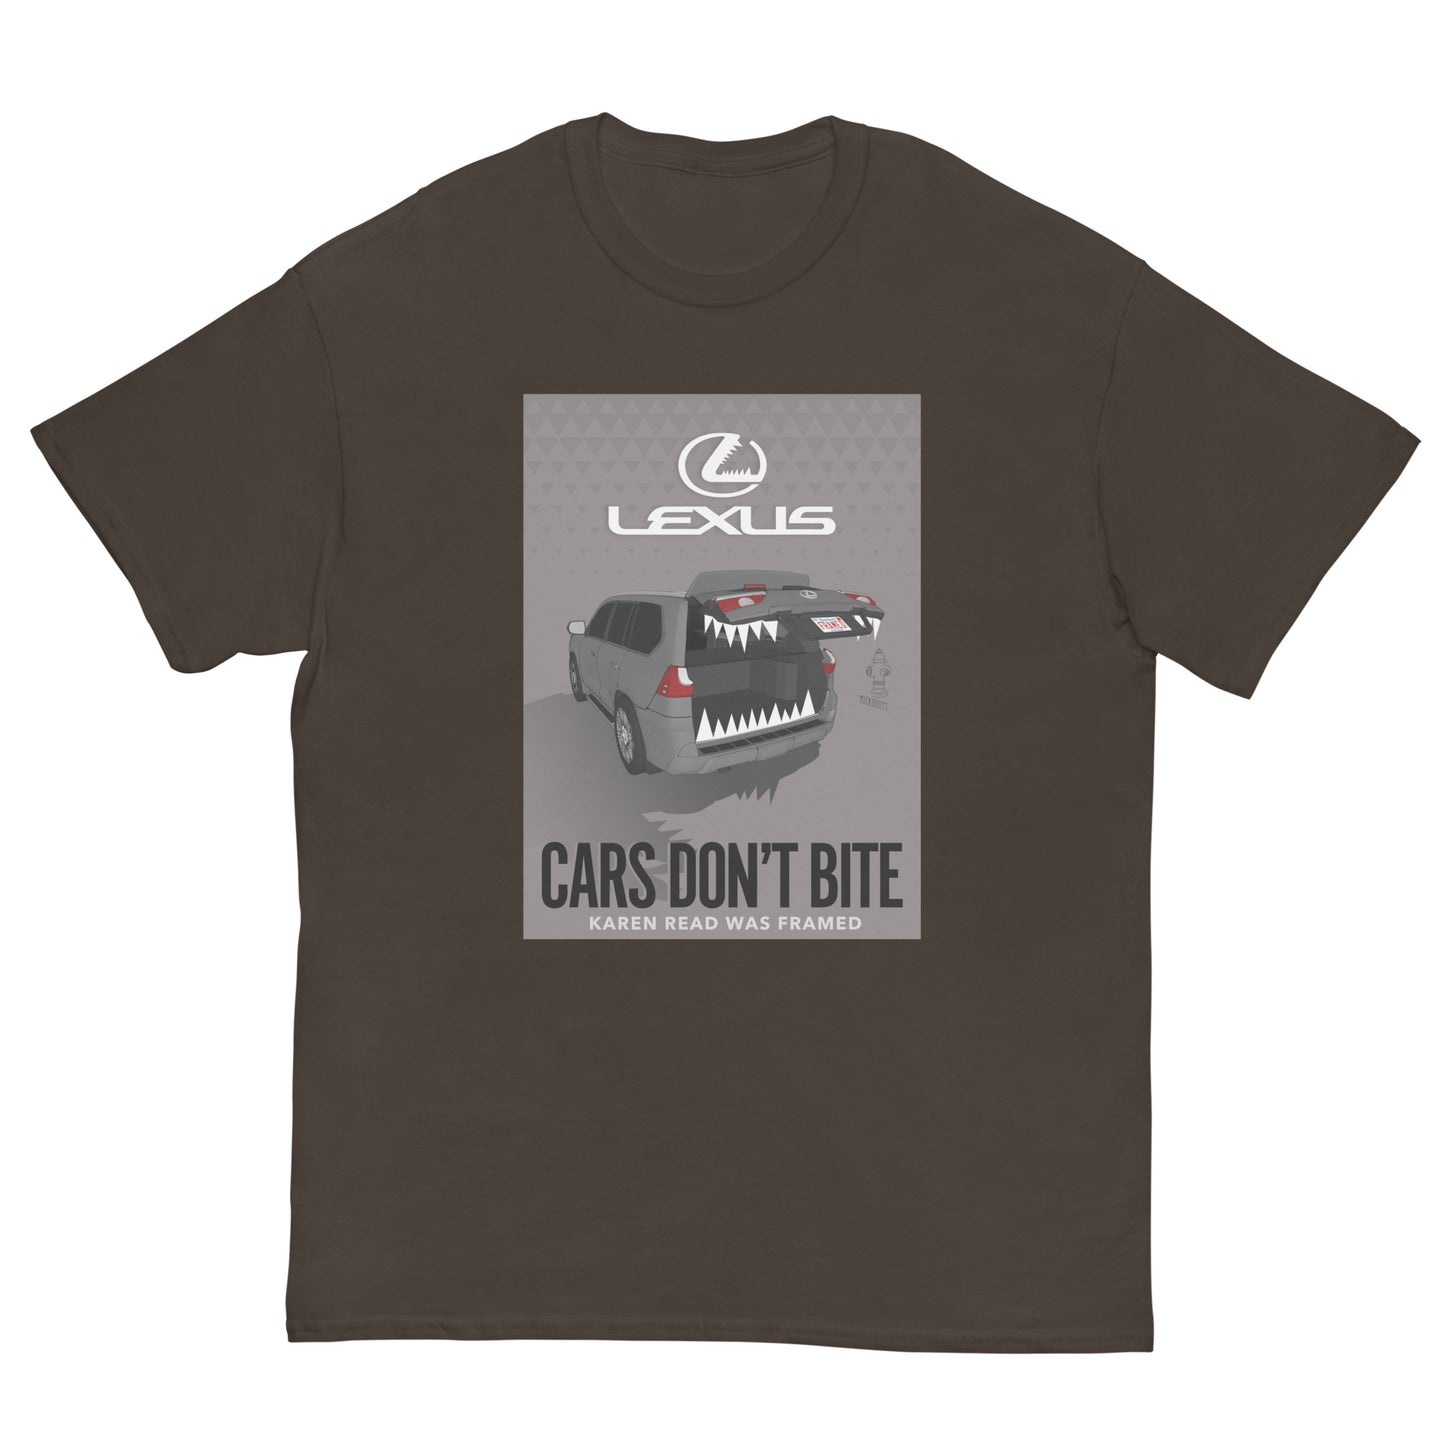 Microdots "Cars Don't Bite" Design - Classic Tee